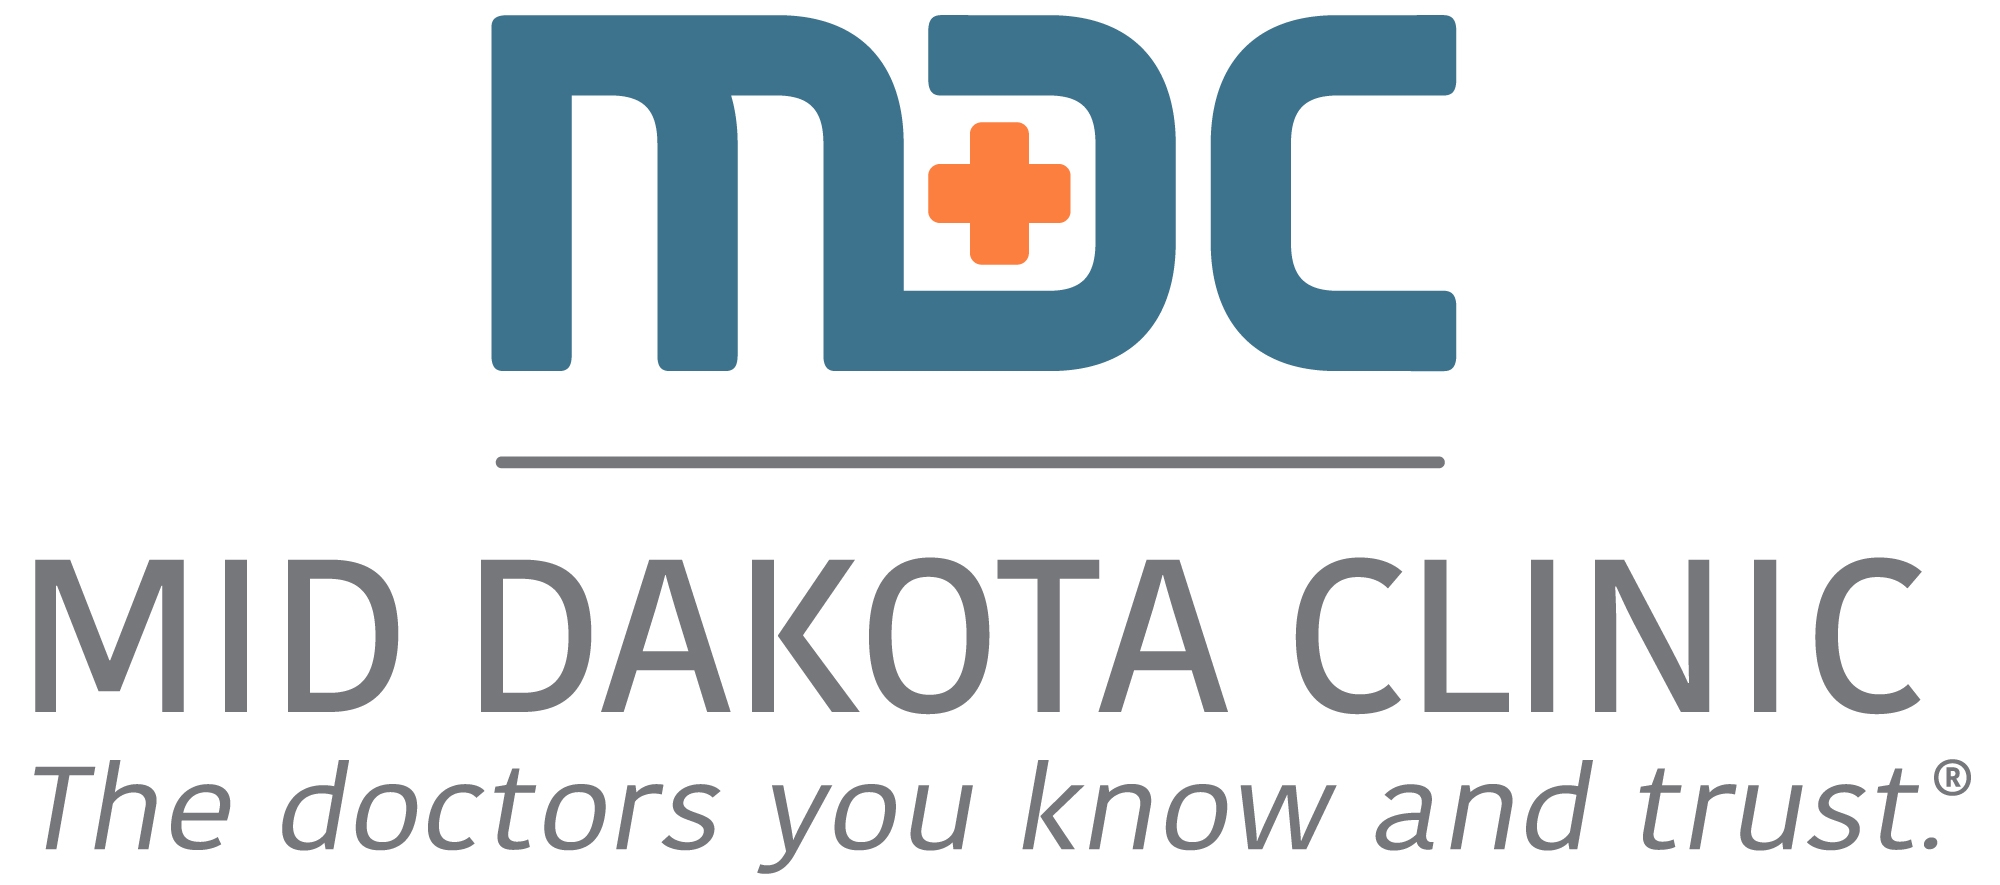 Mid Dakota Clinic logo